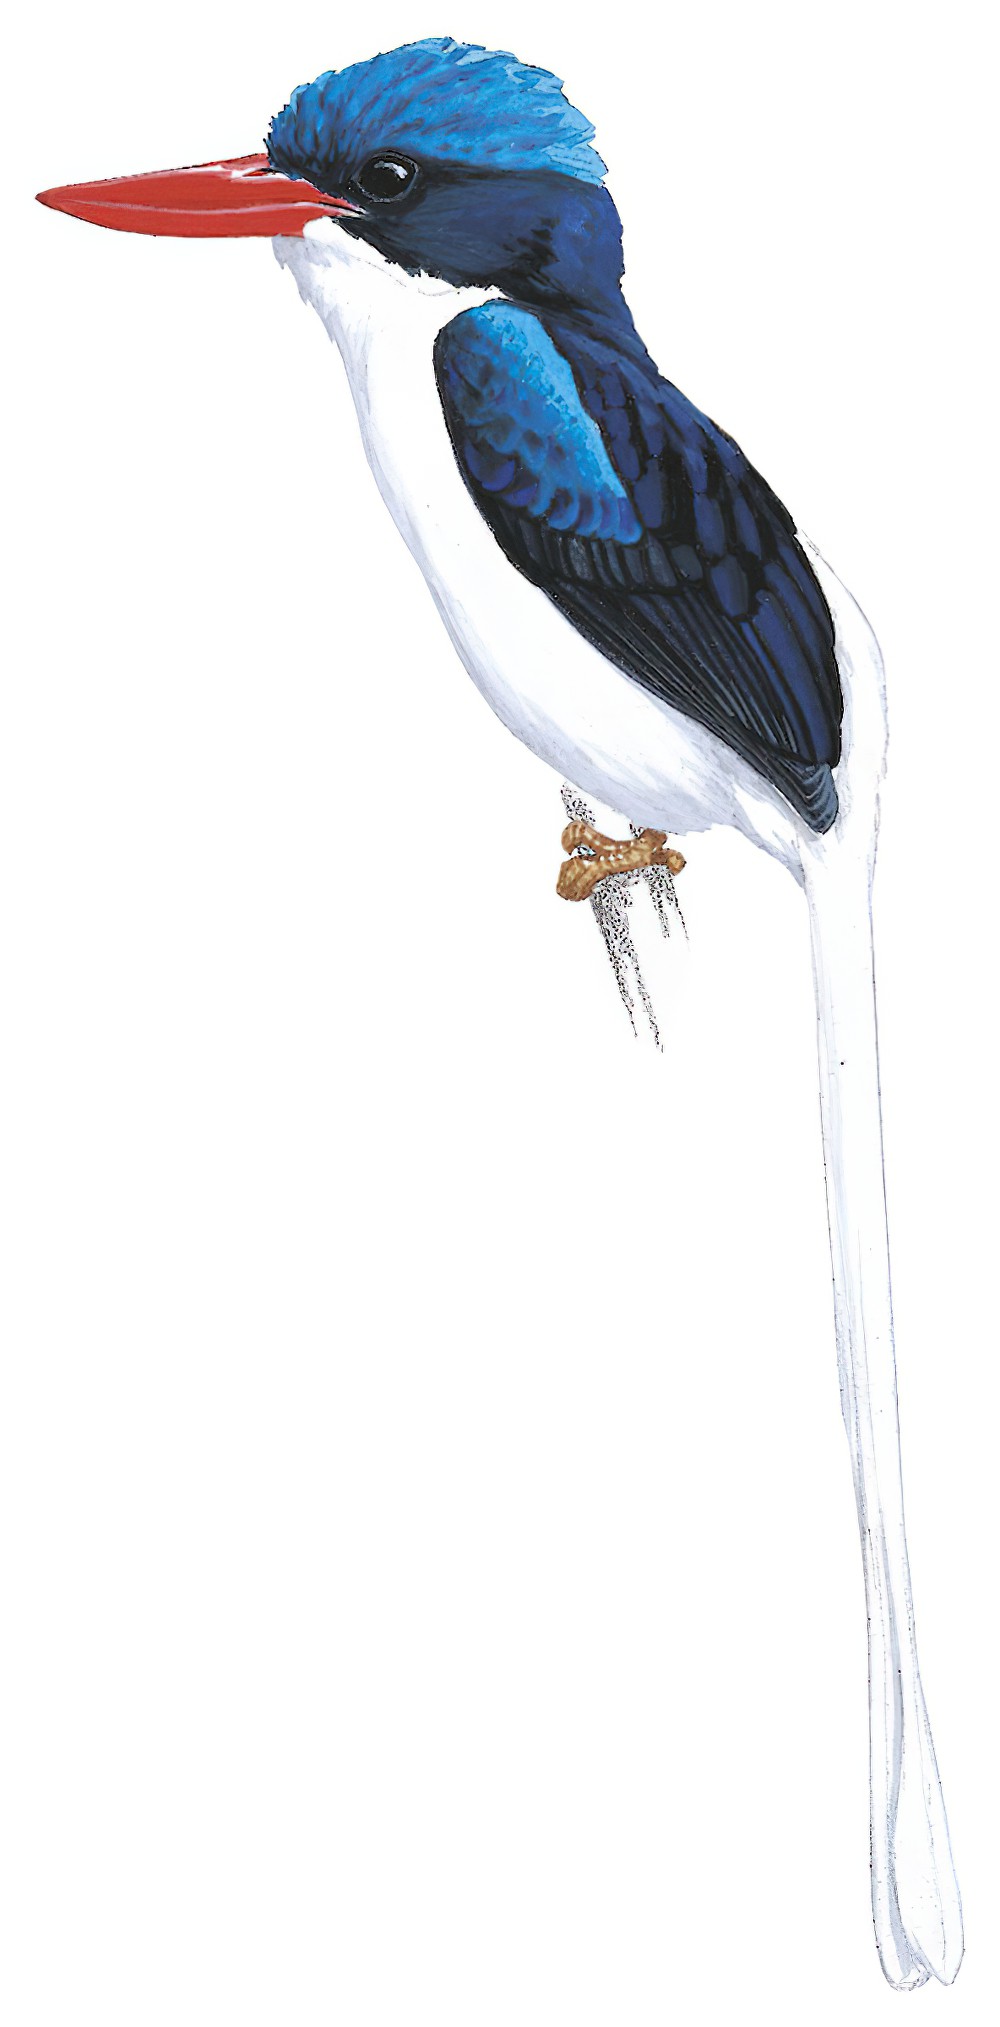 Kofiau Paradise-Kingfisher / Tanysiptera ellioti